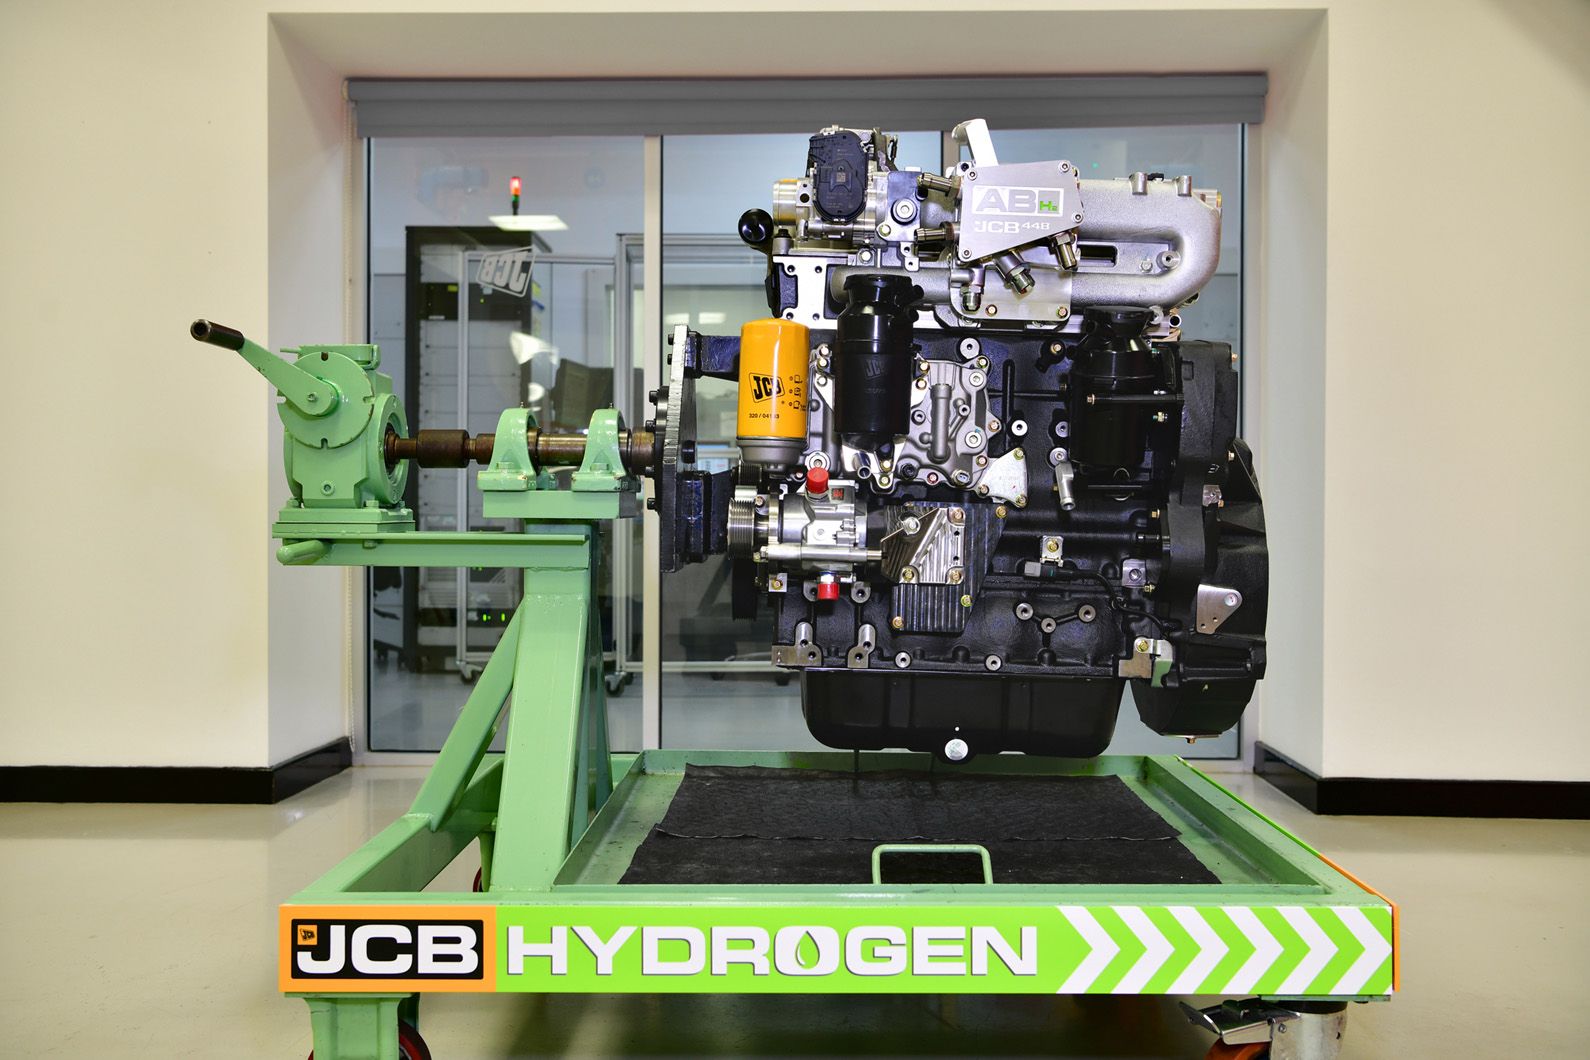 JCB Hydrogen Internal Combustion Engine 